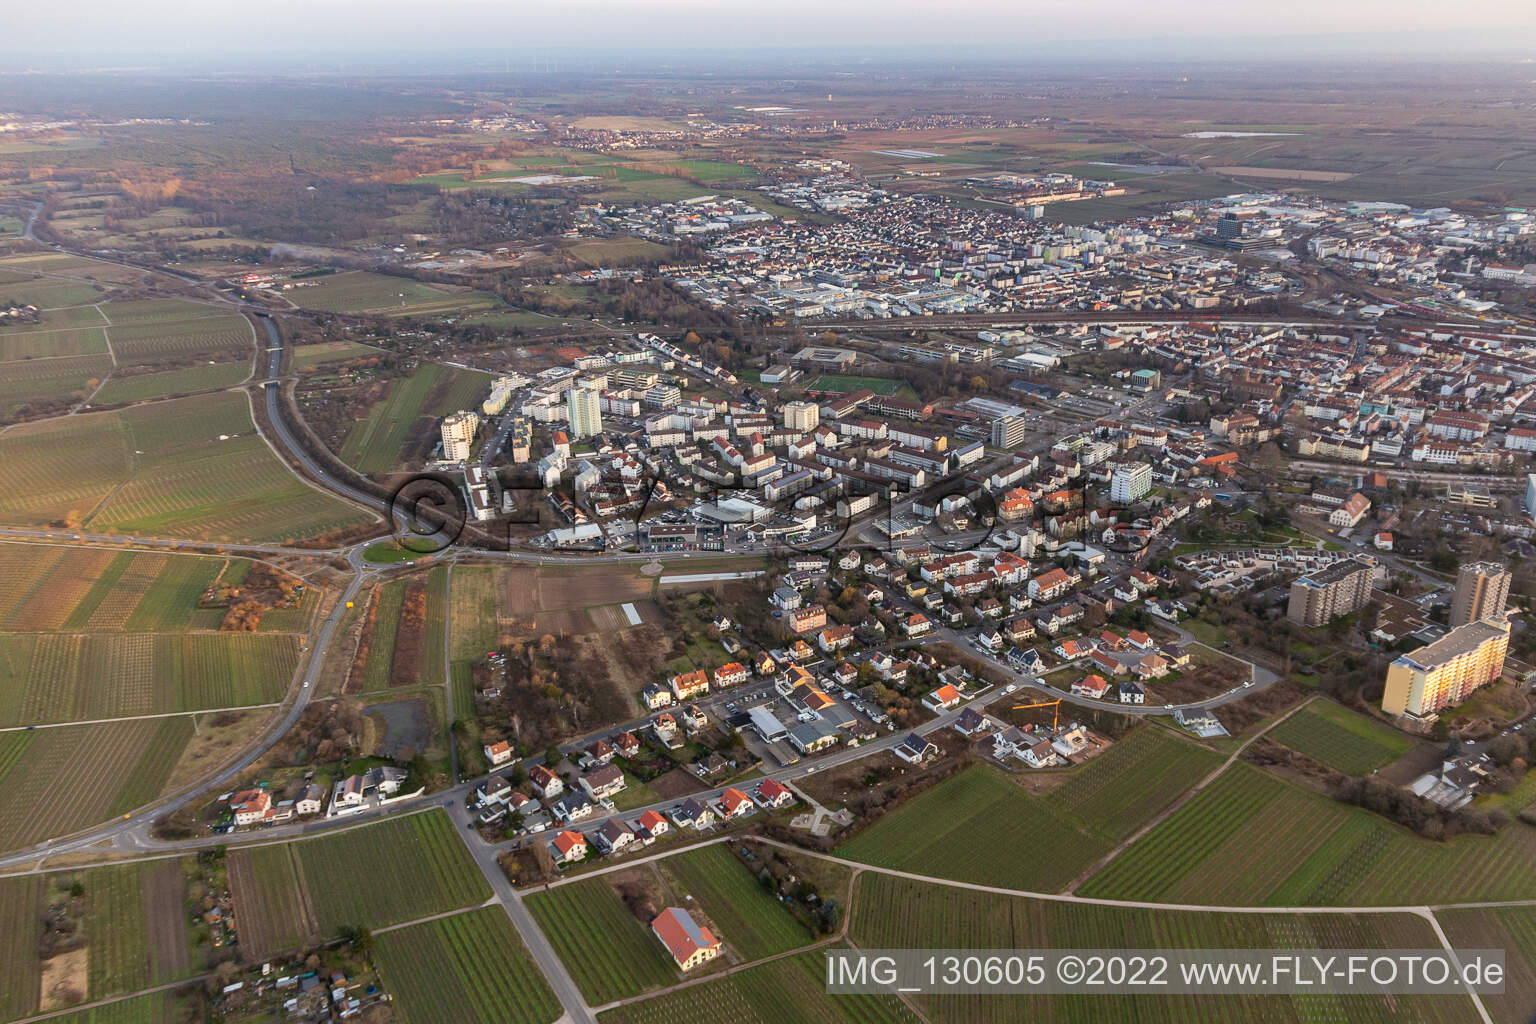 Aerial view of Neustadt an der Weinstraße in the state Rhineland-Palatinate, Germany